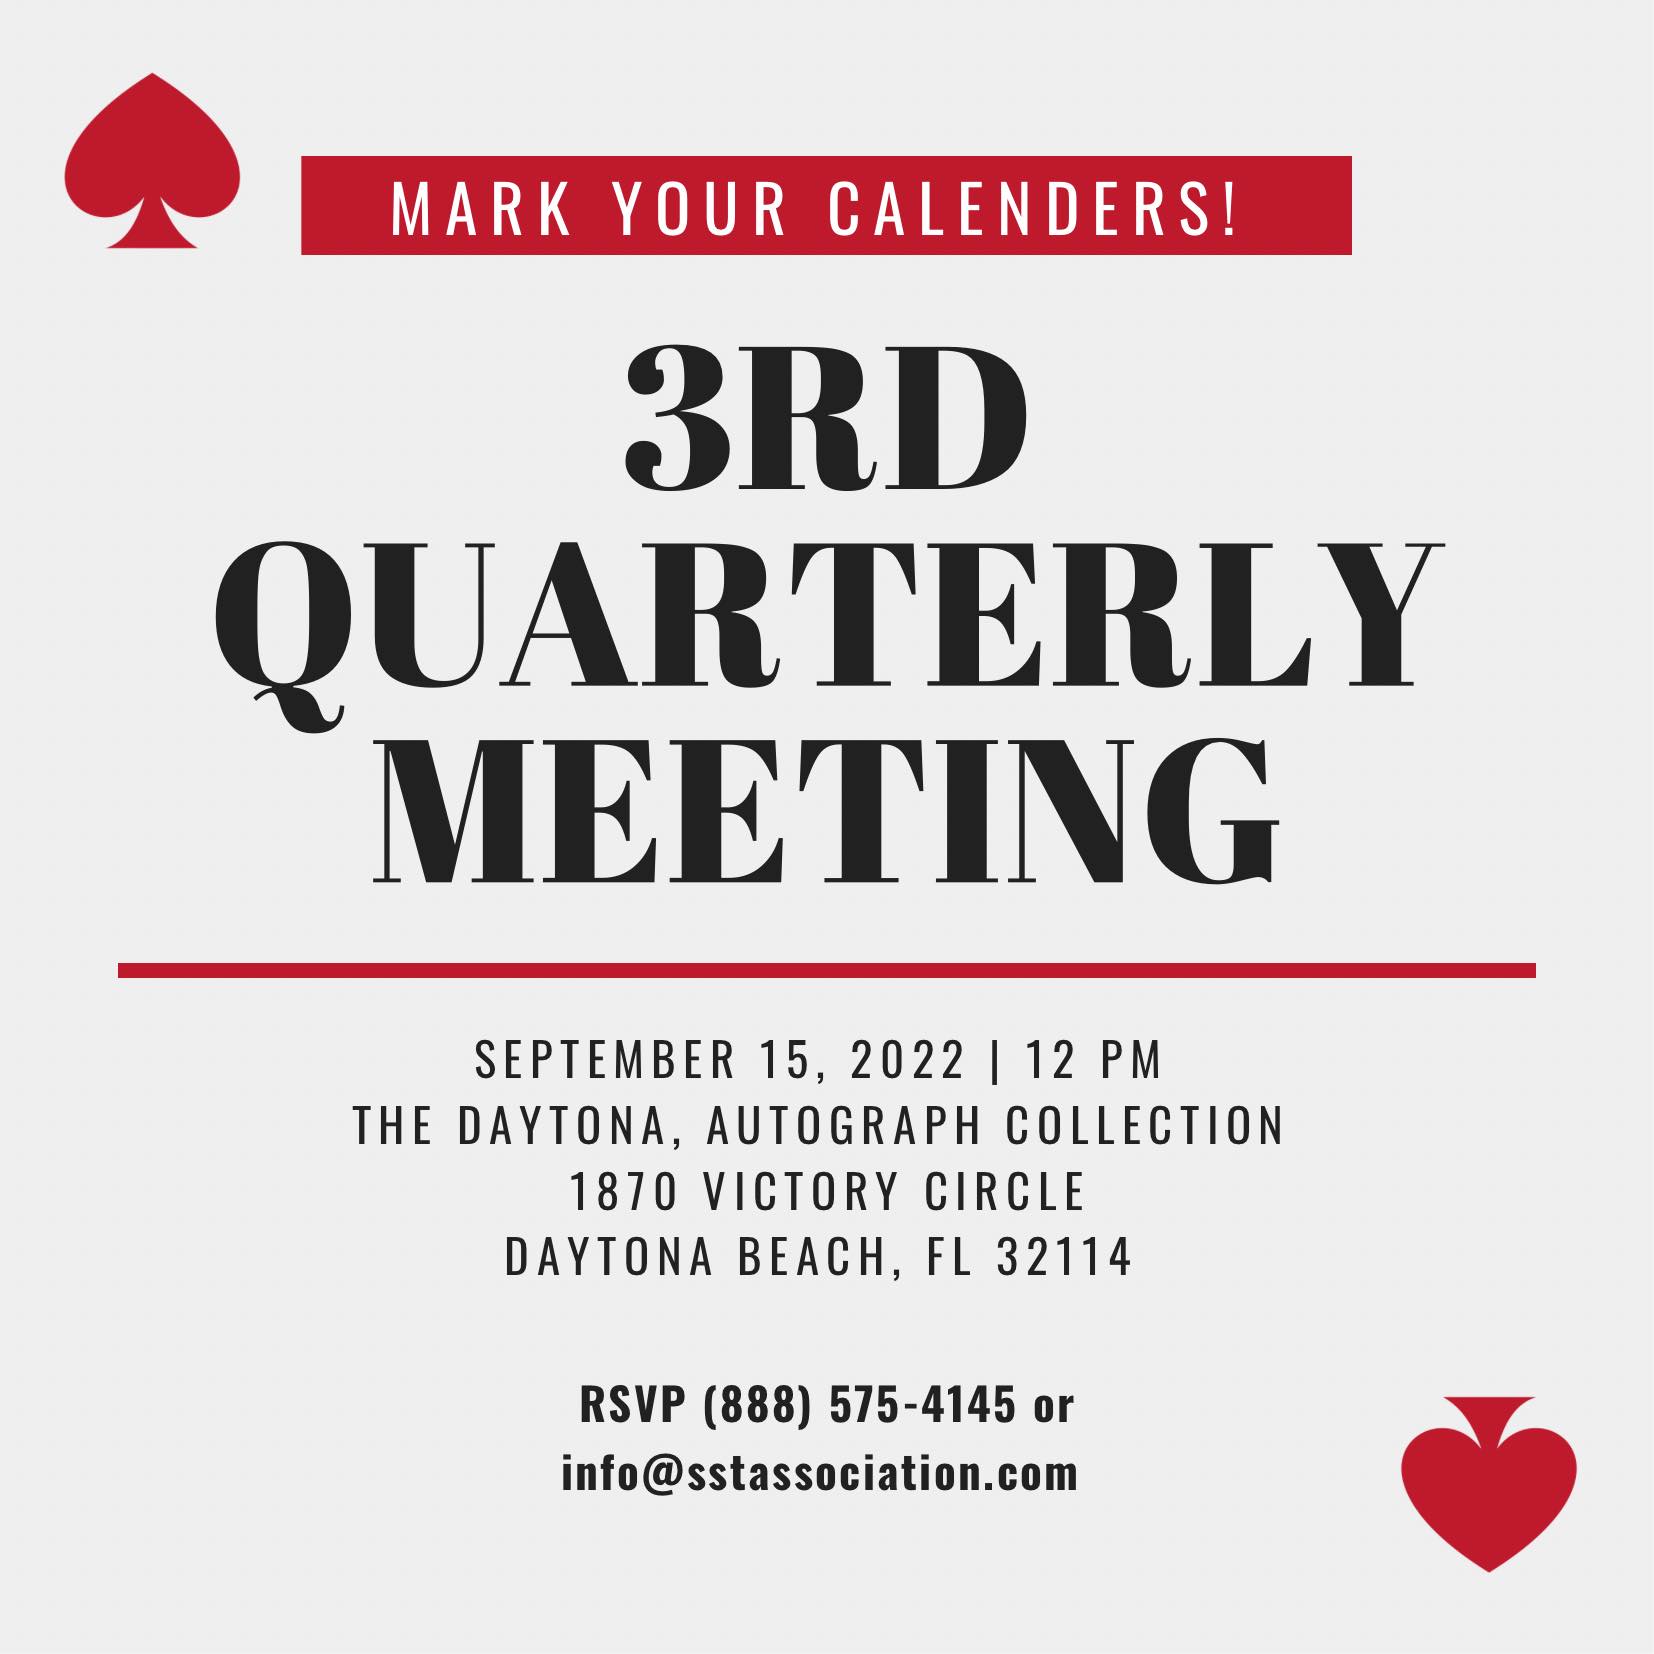 3rd Quarterly Meeting - September 15 - 12:00 pm - The Daytona, Autograph Collection - 1870 Victory Circle, Daytona, FL, 32114